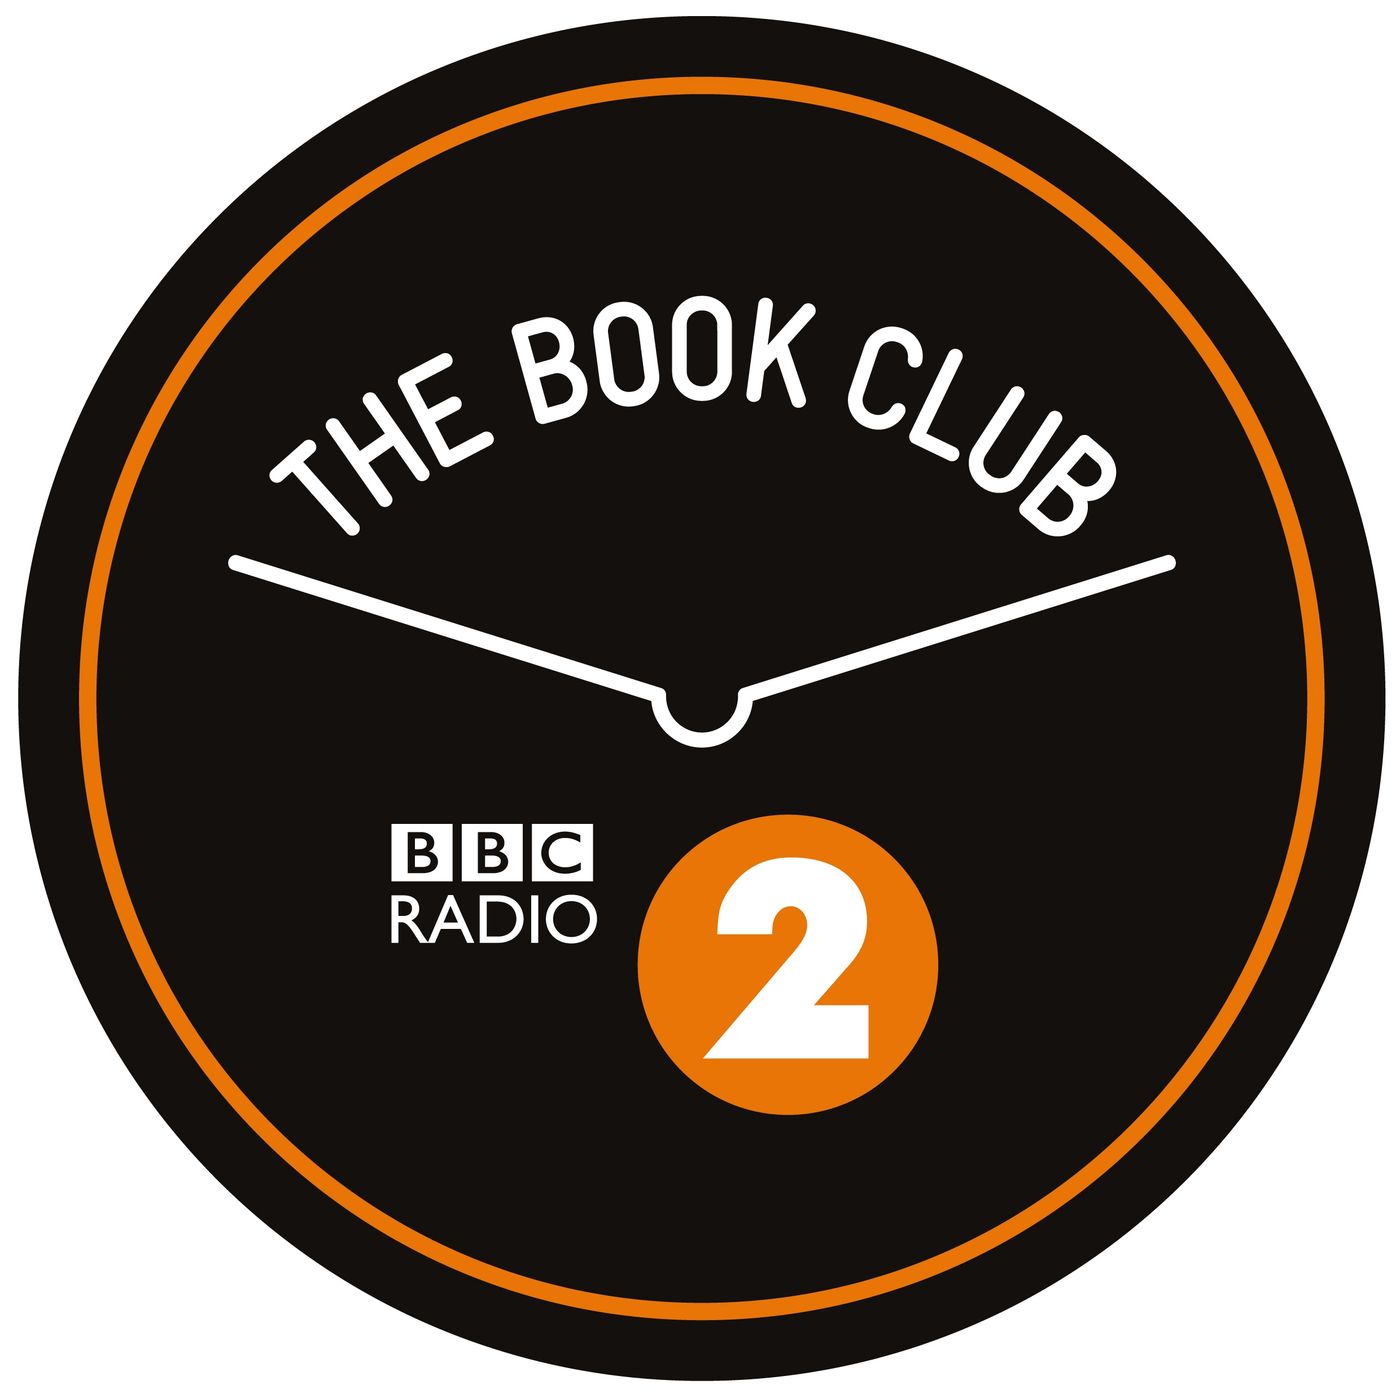 The BBC Radio 2 Book Club